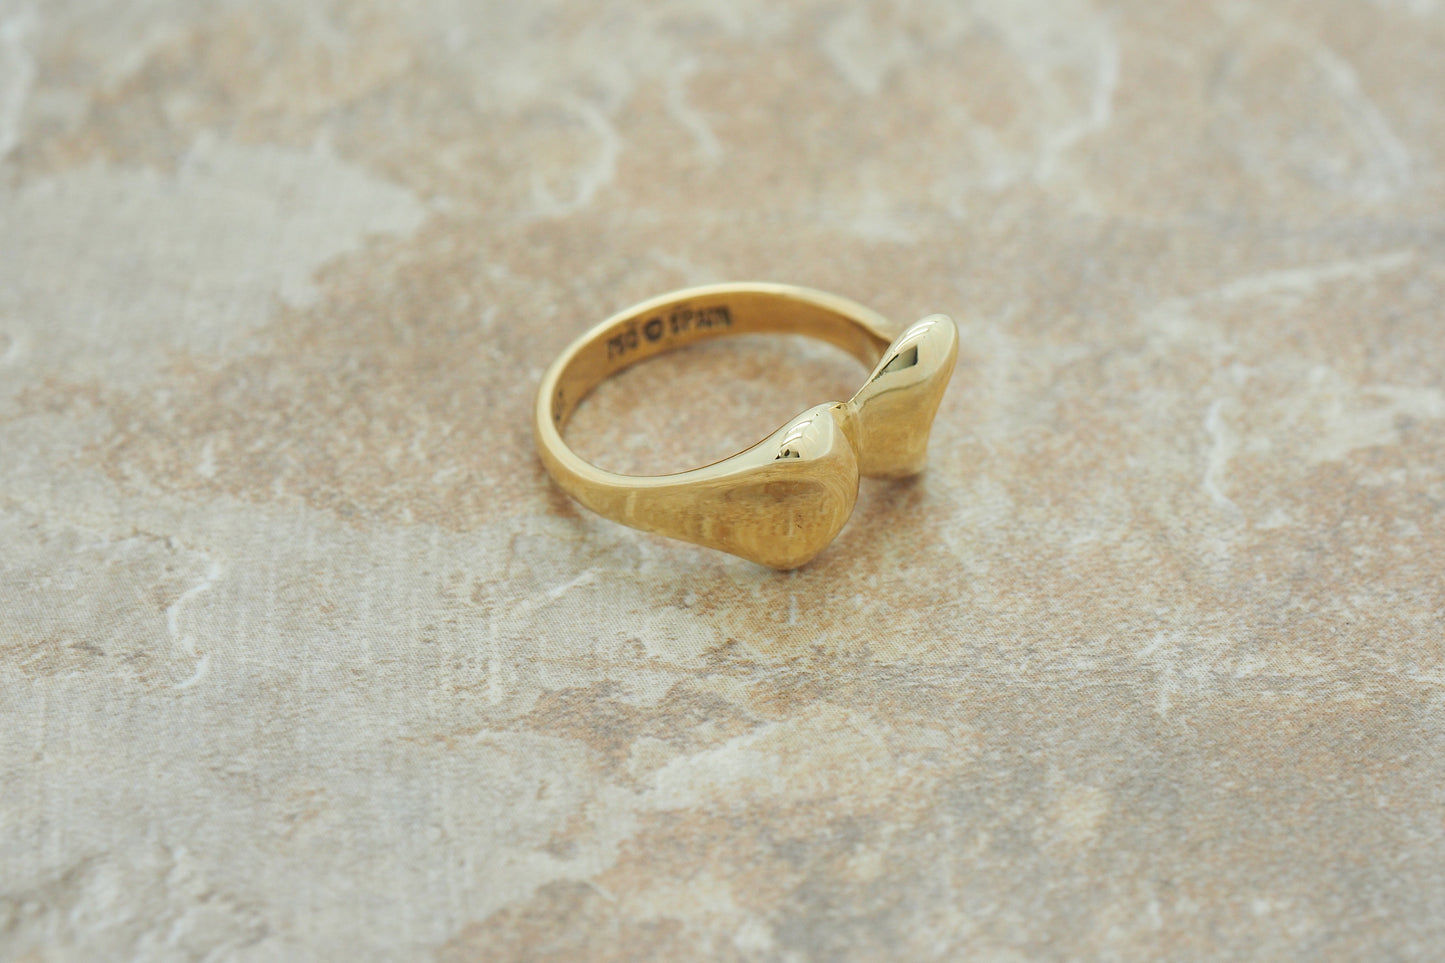 18k Yellow Gold Tiffany & Co. Ribbon Ring, Size 4.25 - 5.7g